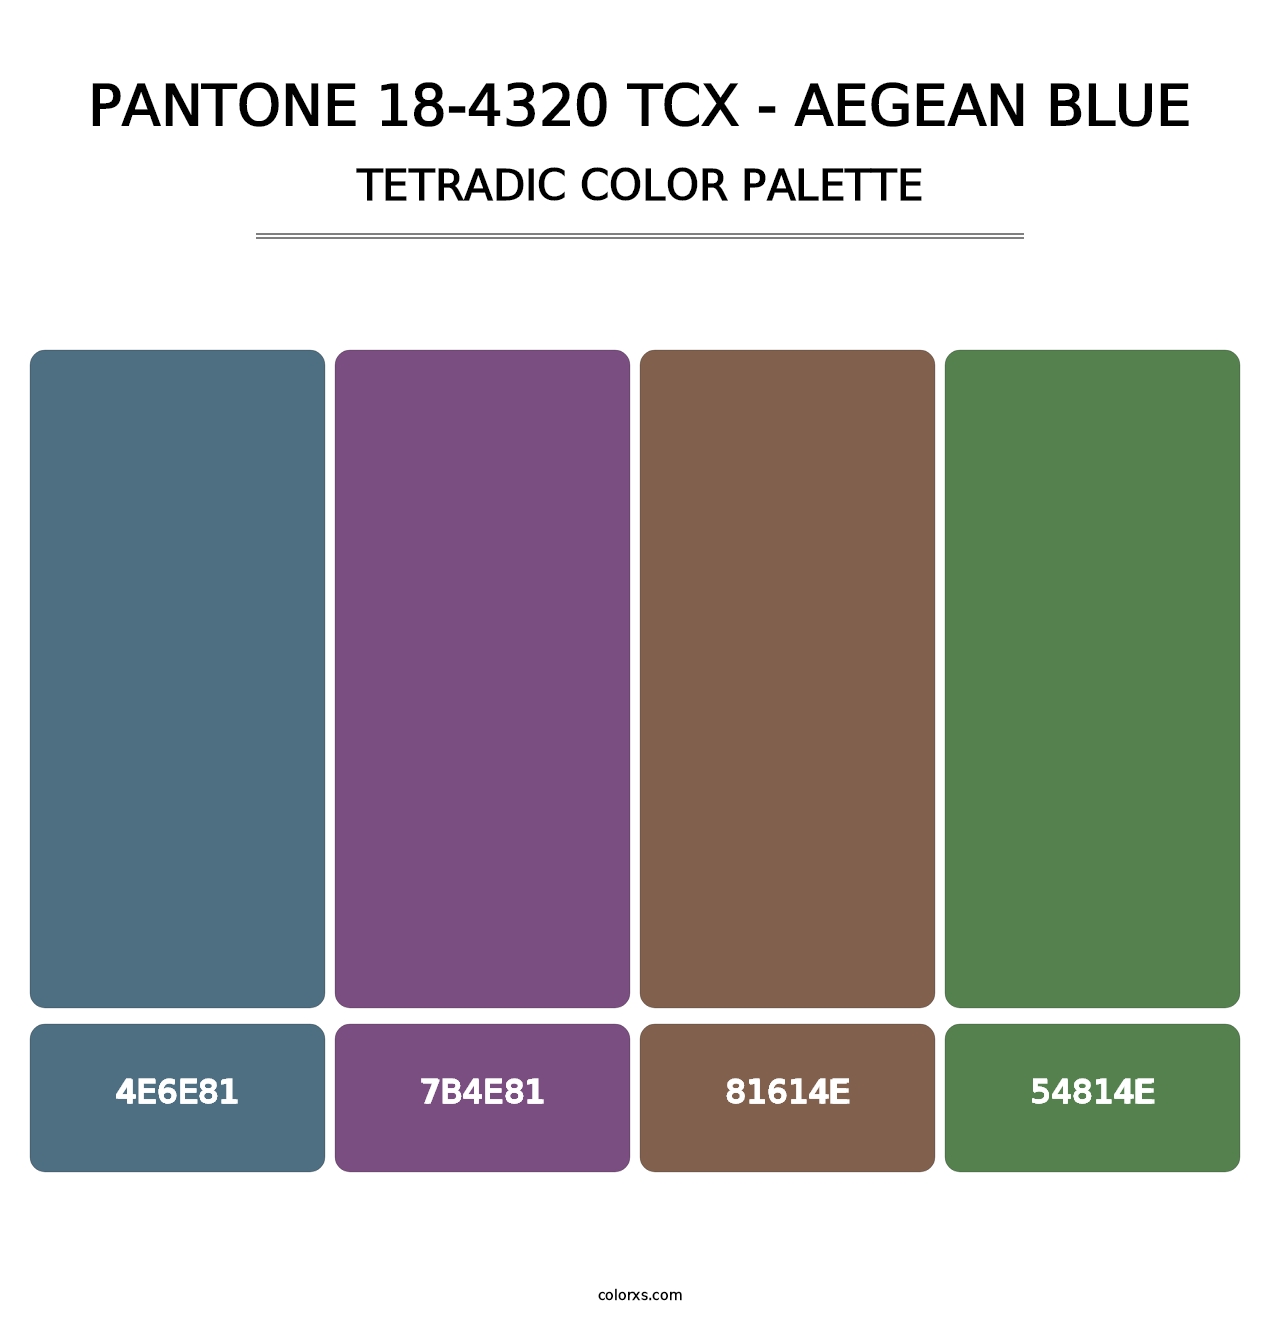 PANTONE 18-4320 TCX - Aegean Blue - Tetradic Color Palette